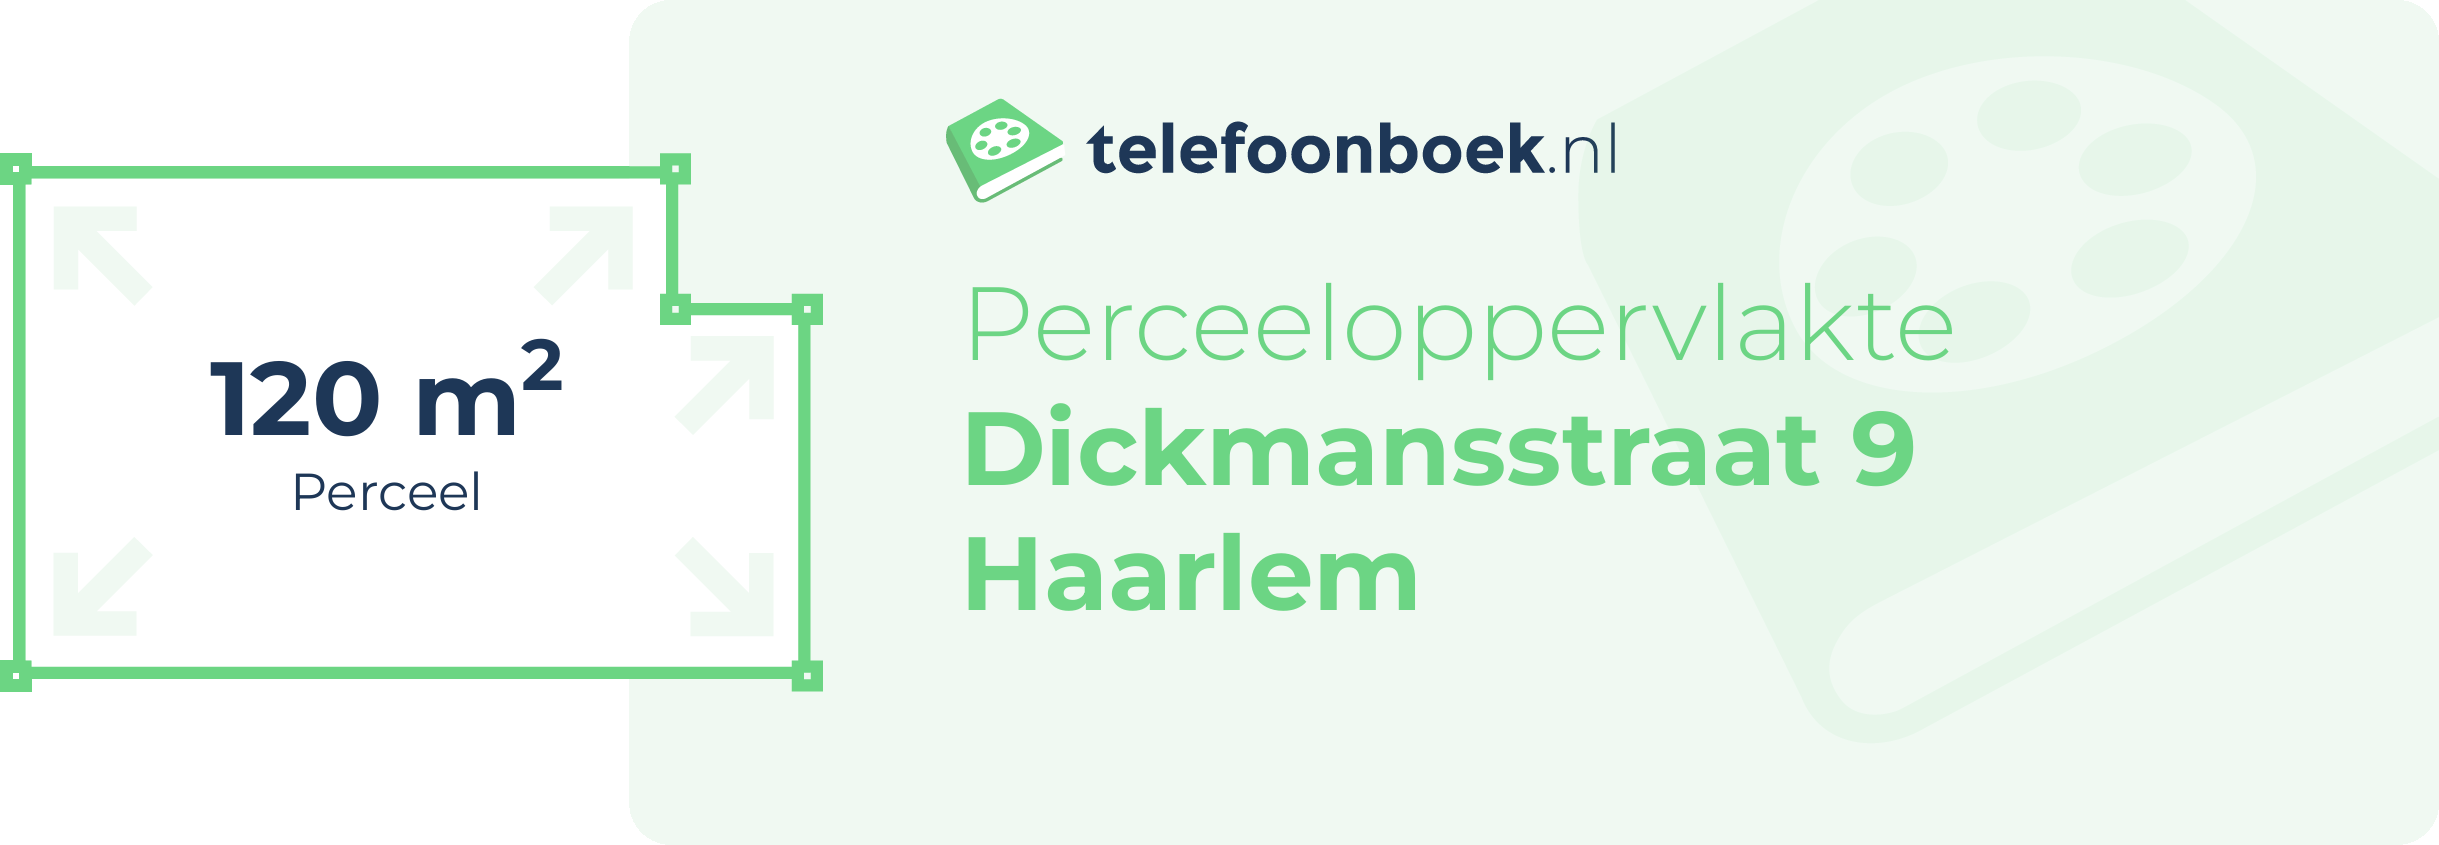 Perceeloppervlakte Dickmansstraat 9 Haarlem